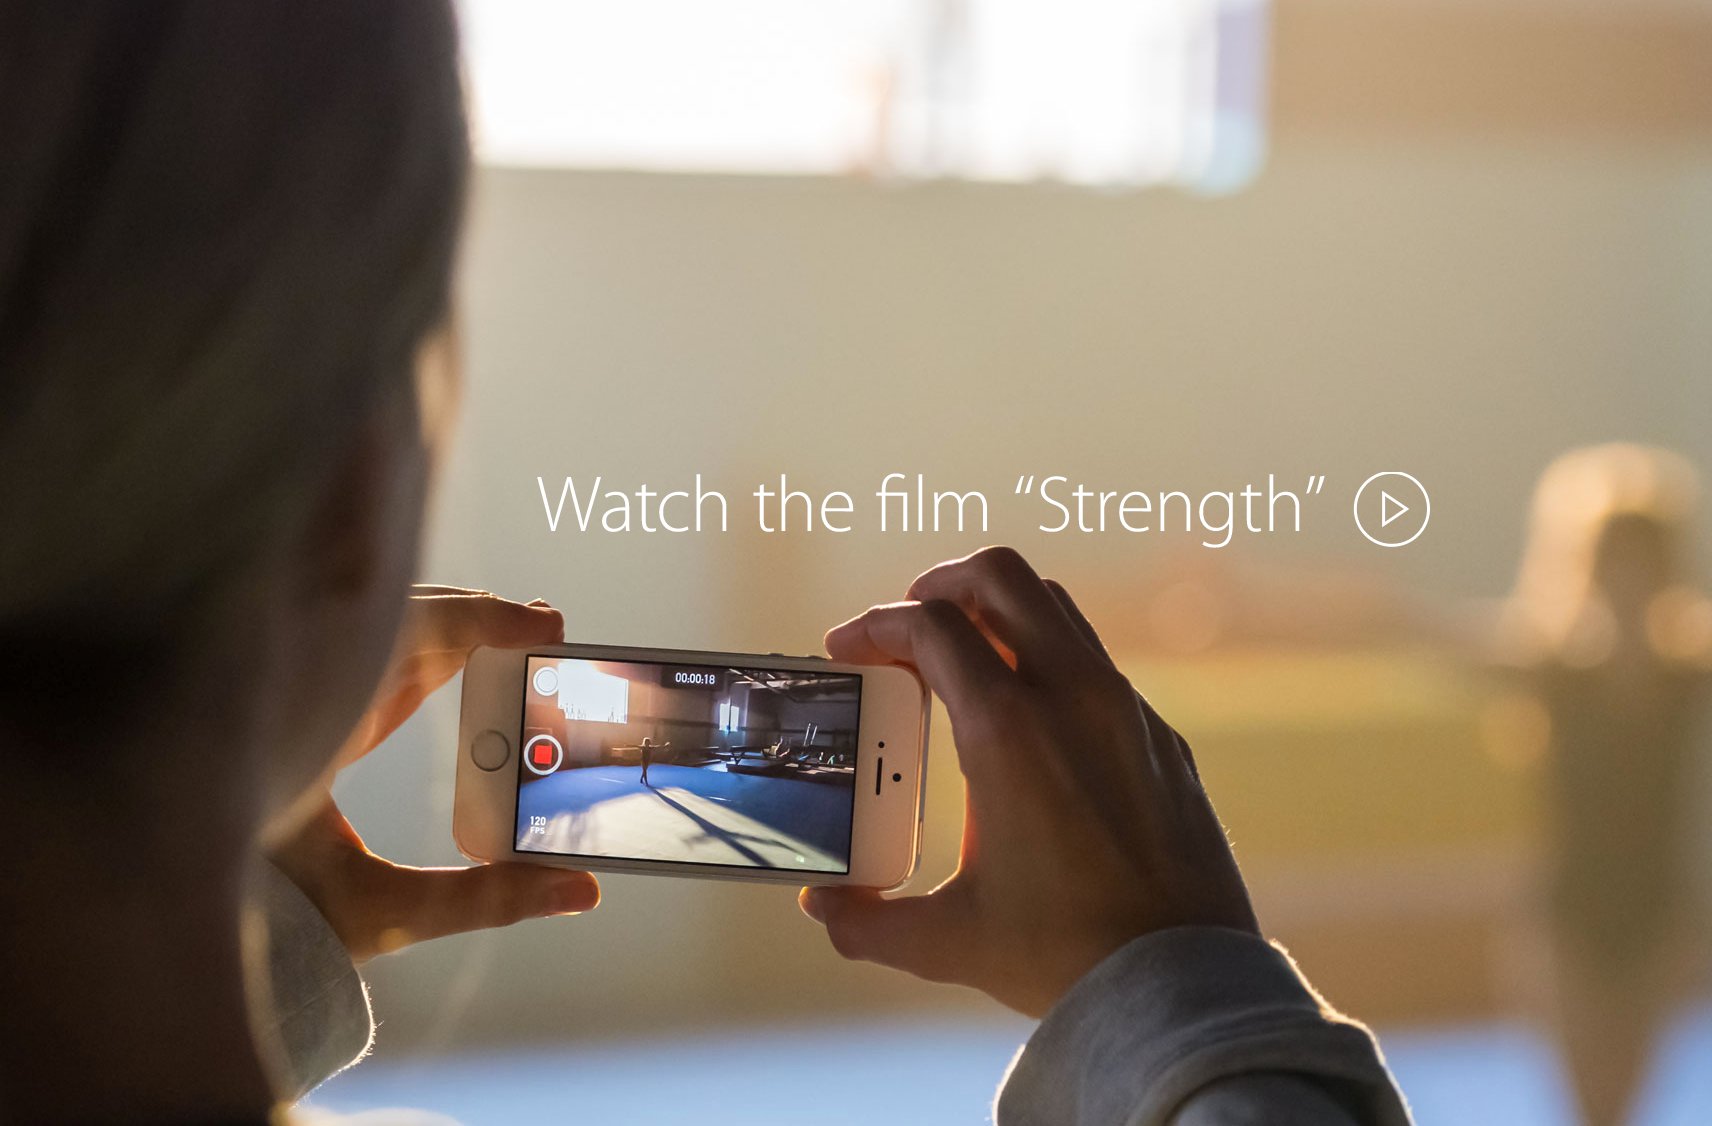 iPhone 5s Stärke: Fitness, Sport & Gesundheit im Fokus 5